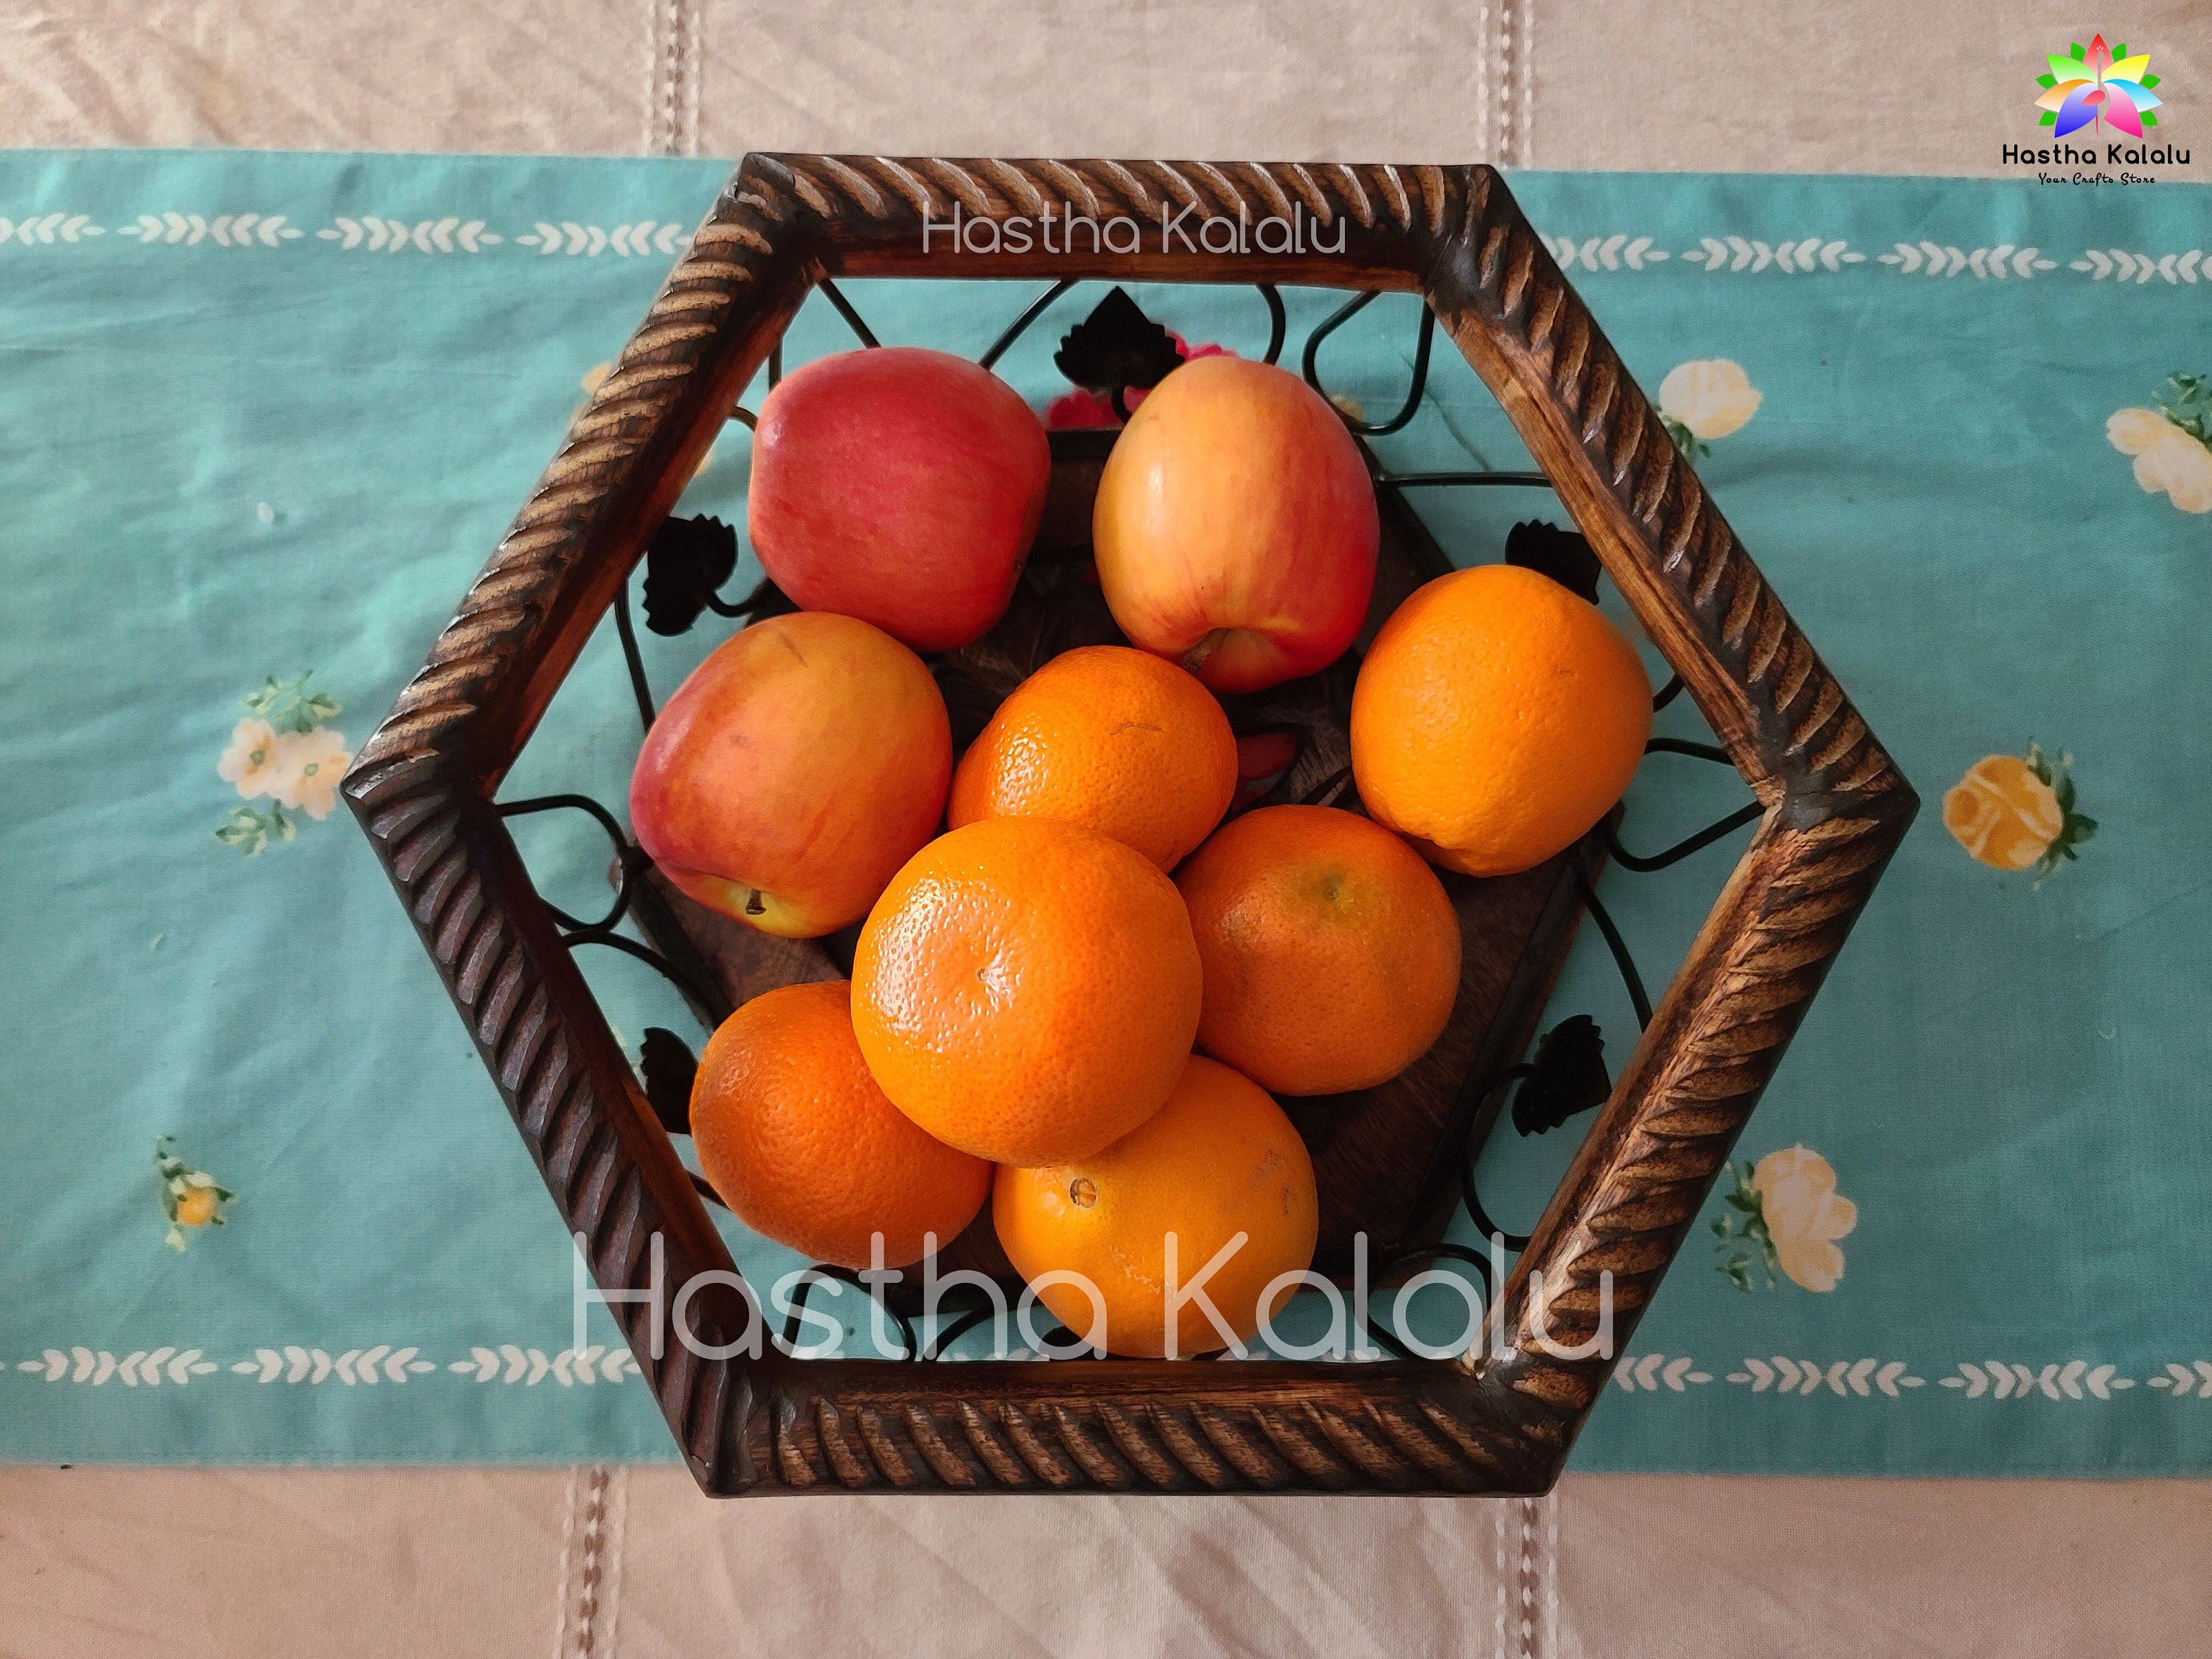 Hexagon shaped Handmade Wooden-Metallic 12 Inch Long Fruit Bowl/ Fruit Basket